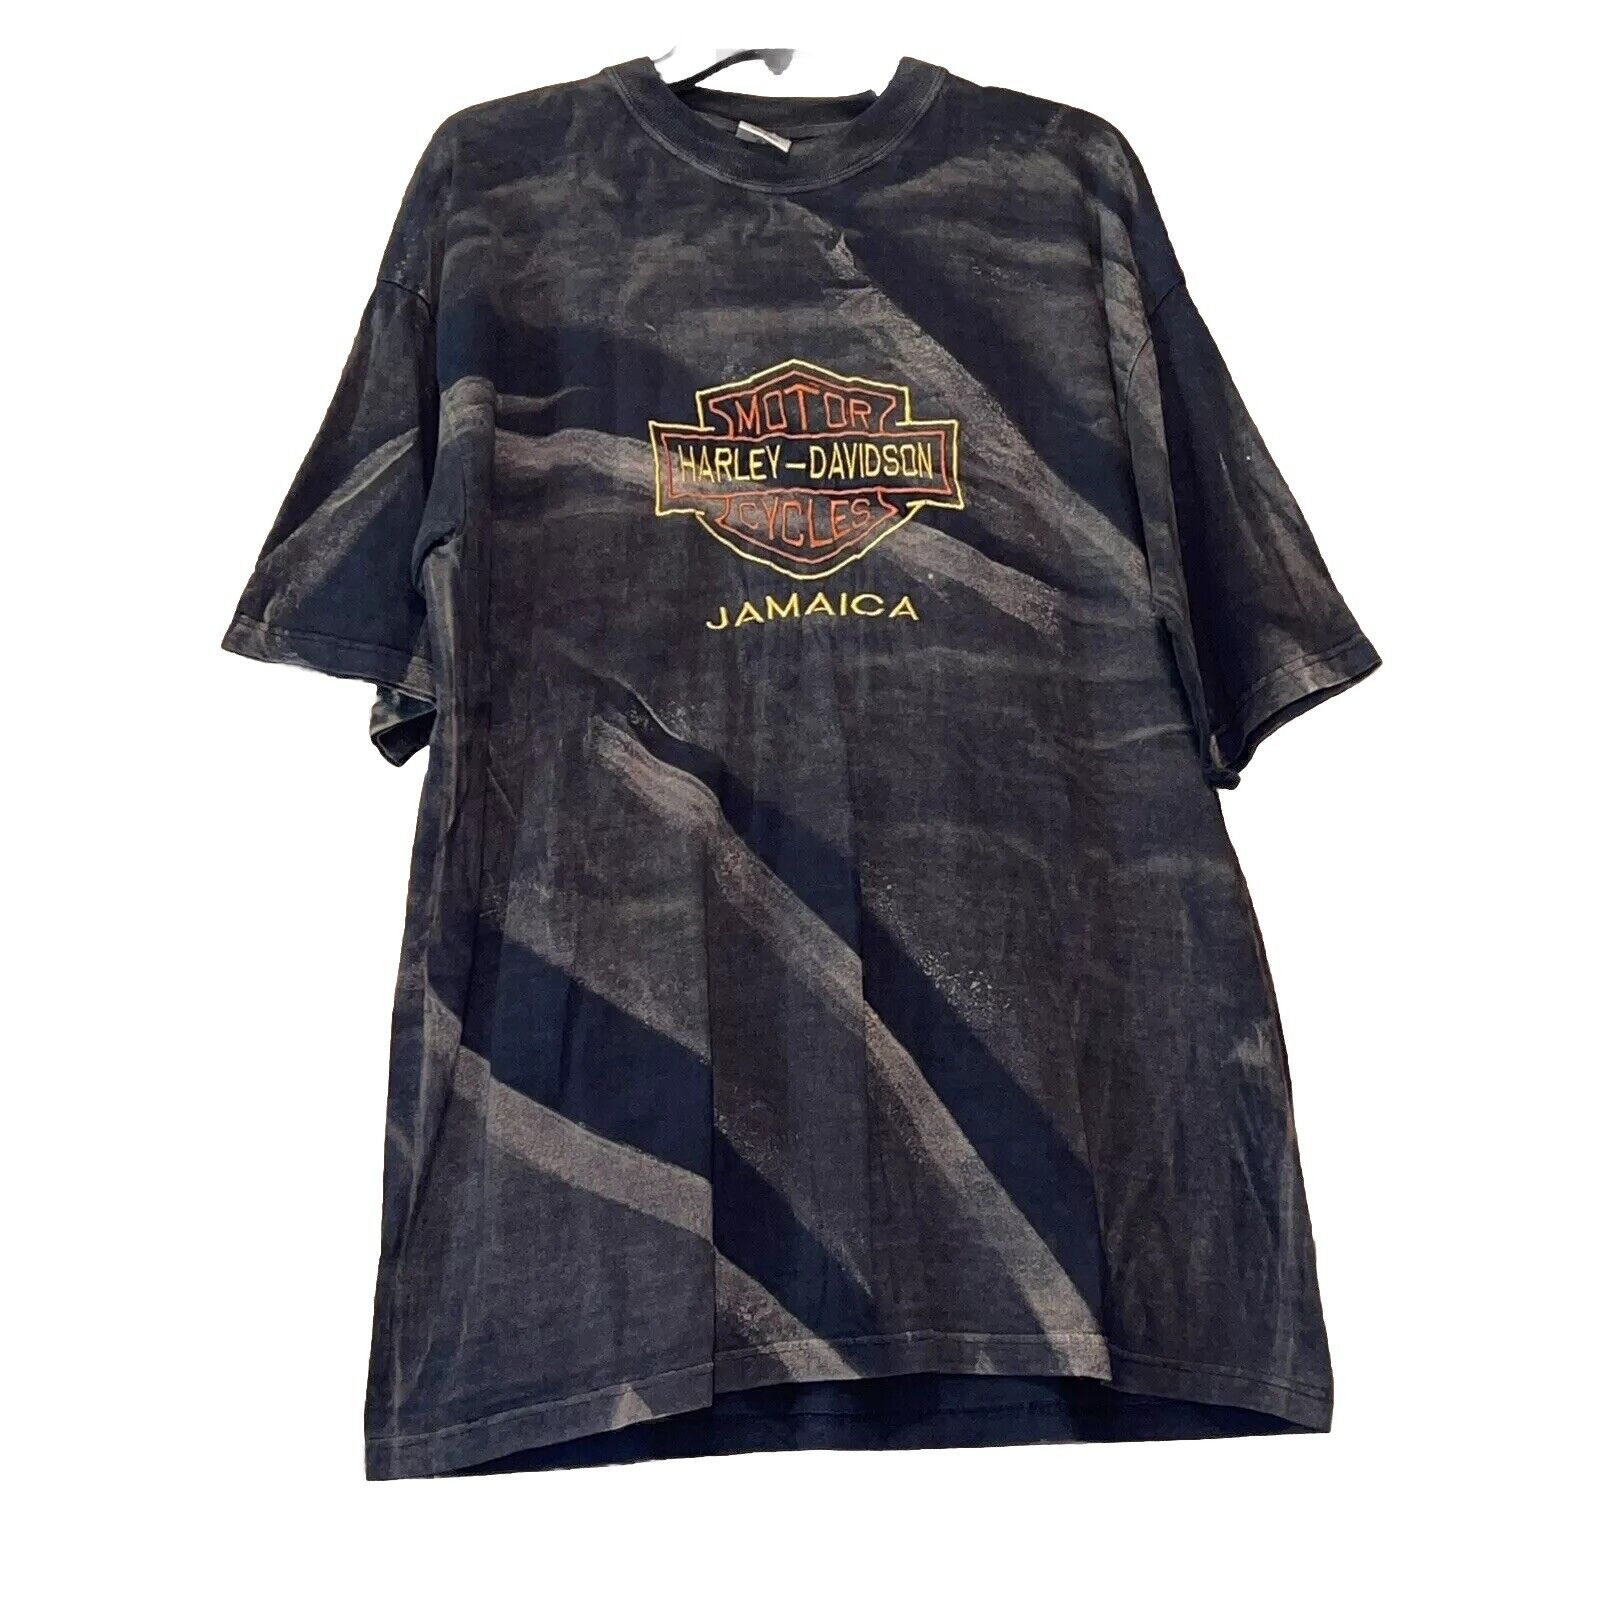 Vintage Harley Davidson Jamaica emboidered t shirt Aop guc size xl e1600